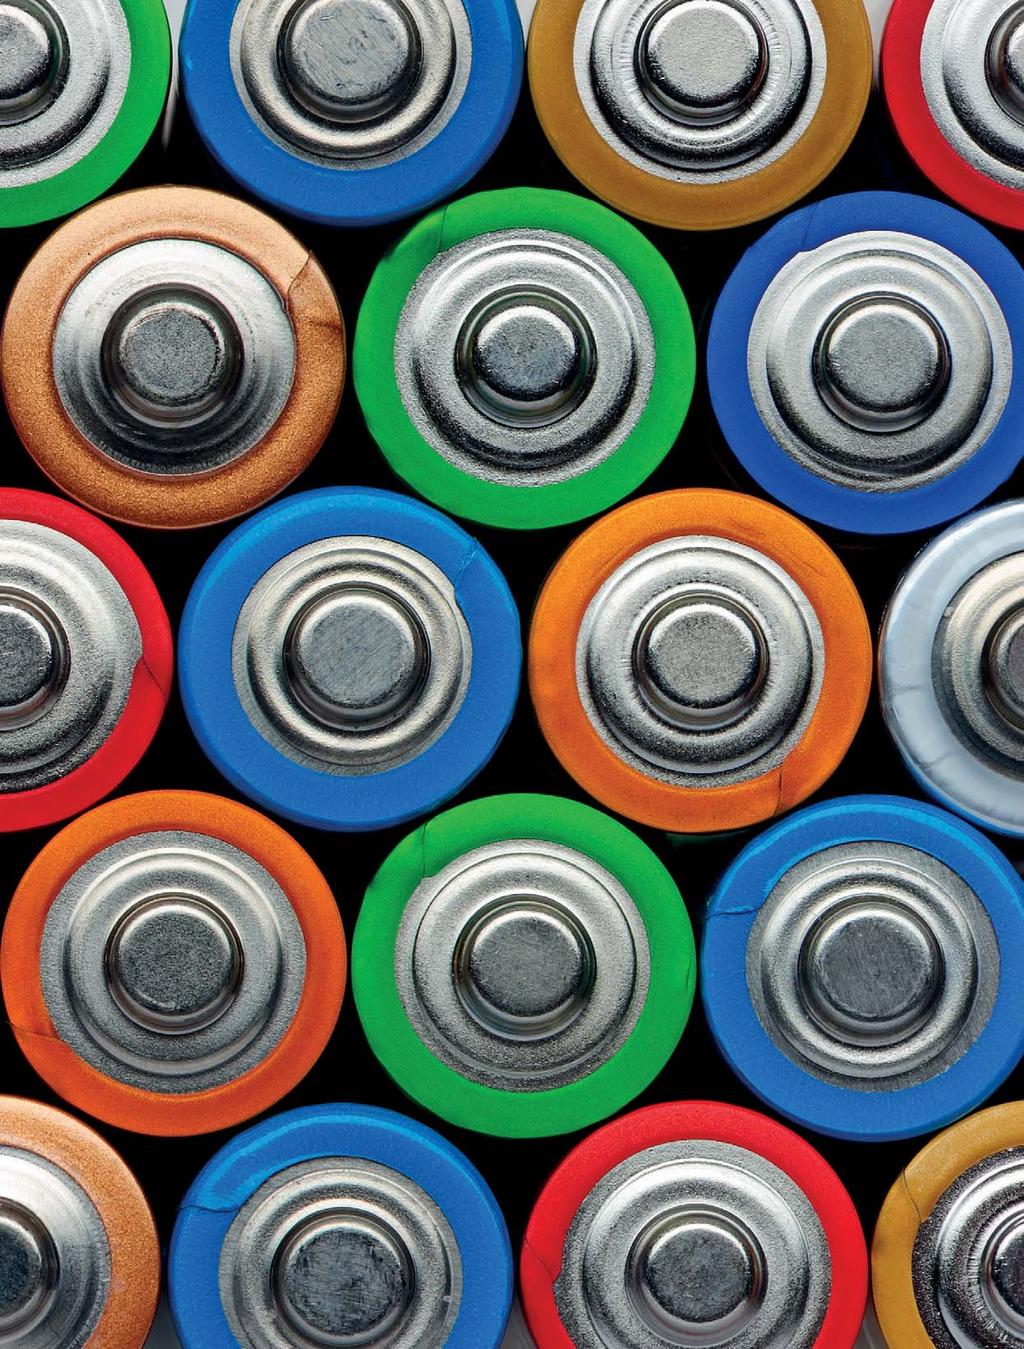 GP Batteries - Your